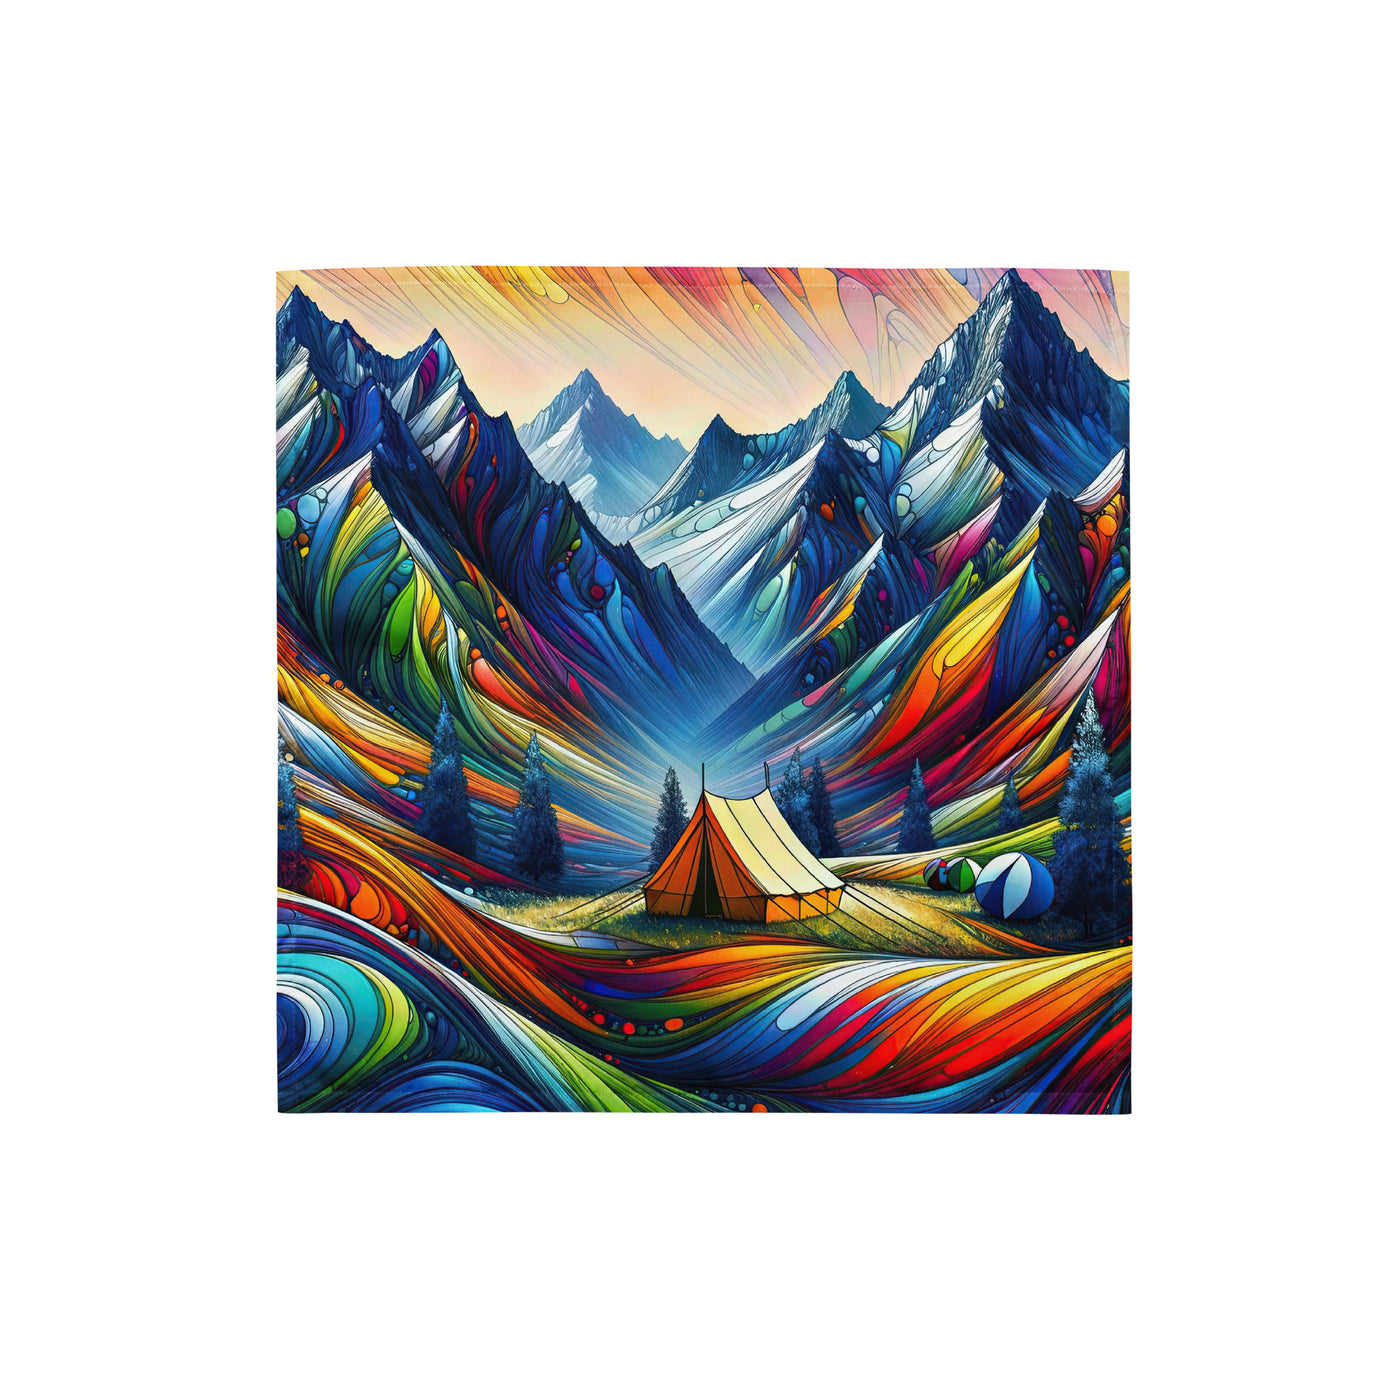 Surreale Alpen in abstrakten Farben, dynamische Formen der Landschaft - Bandana (All-Over Print) camping xxx yyy zzz S